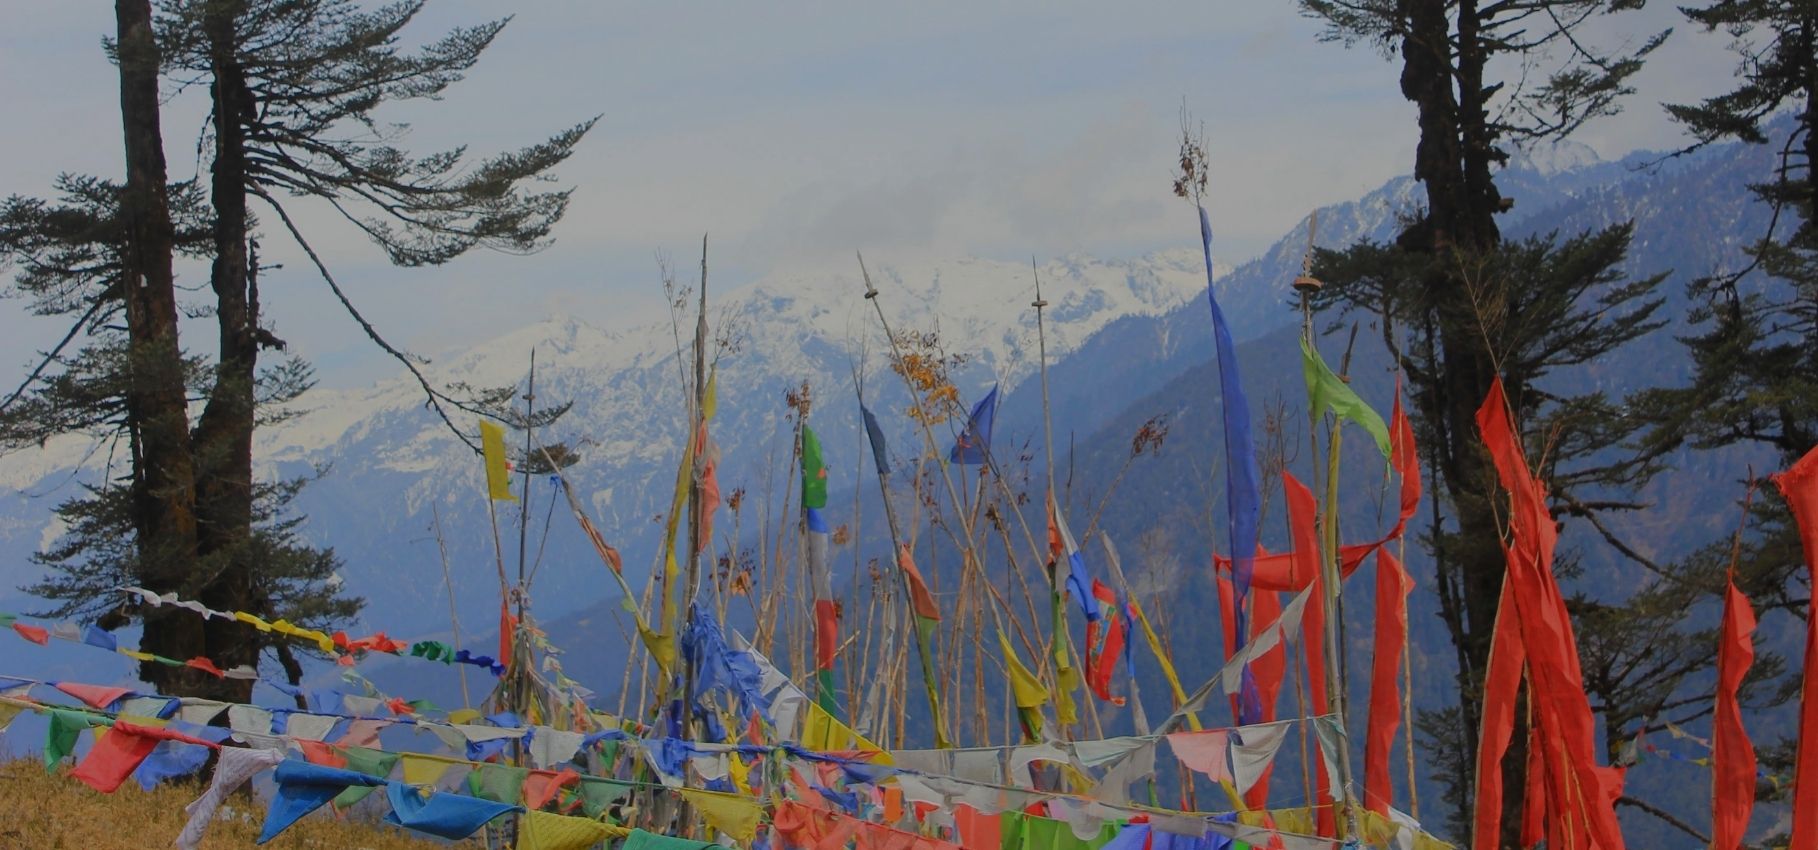 Bhutan Travel Itinerary for Budget Travelers